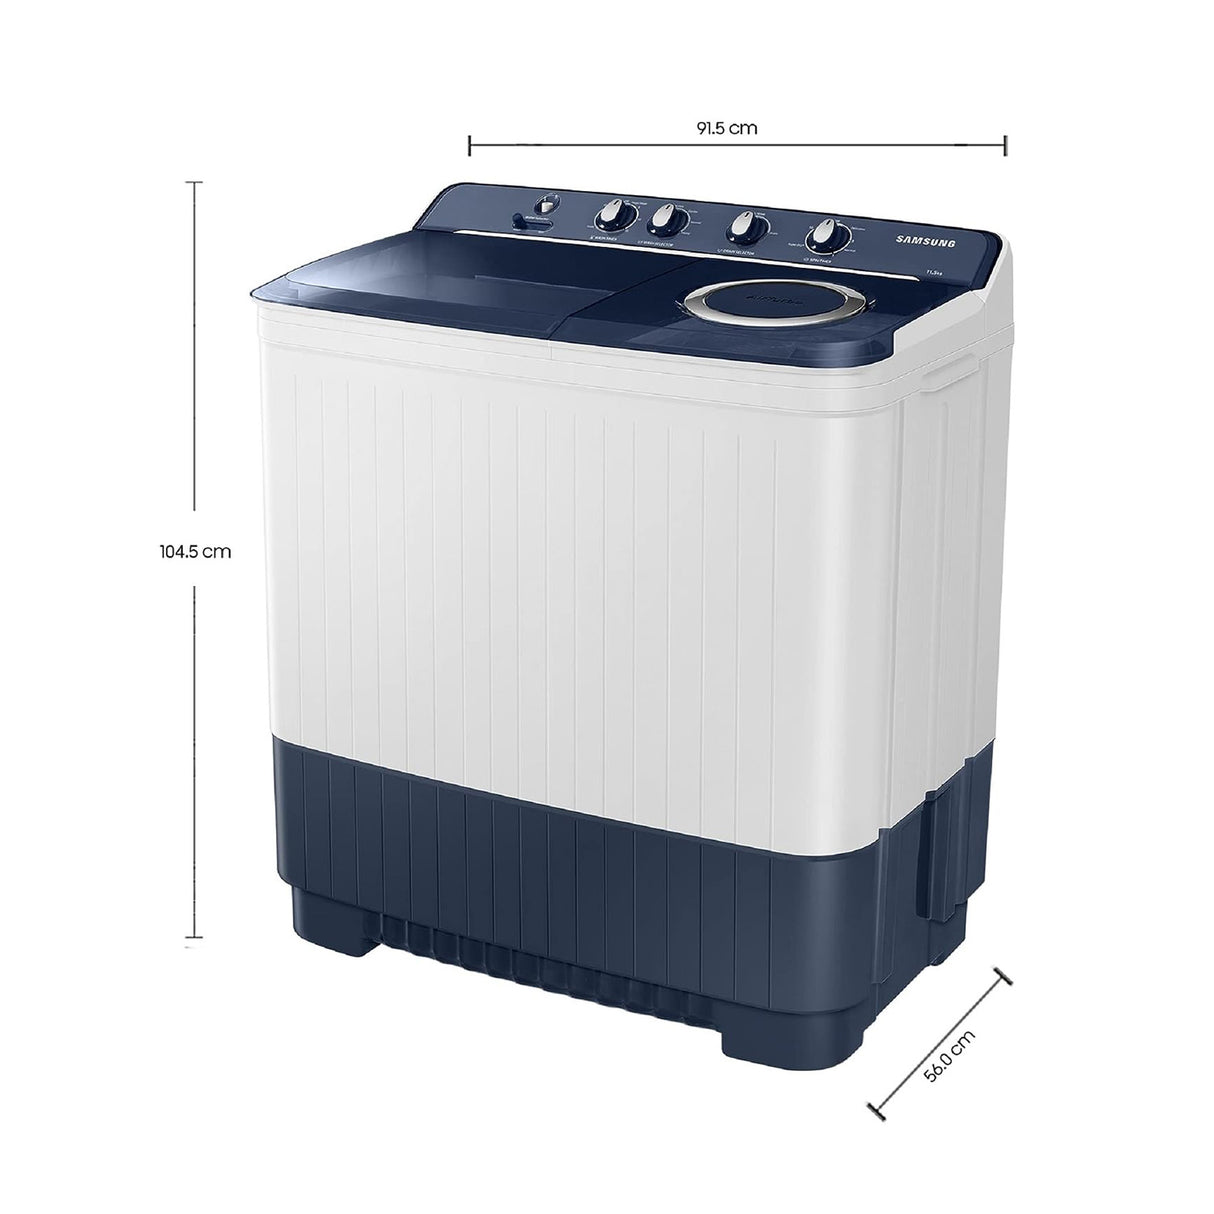 Explore top-tier home appliances like the Samsung 11.5kg Semi-Auto Washer.